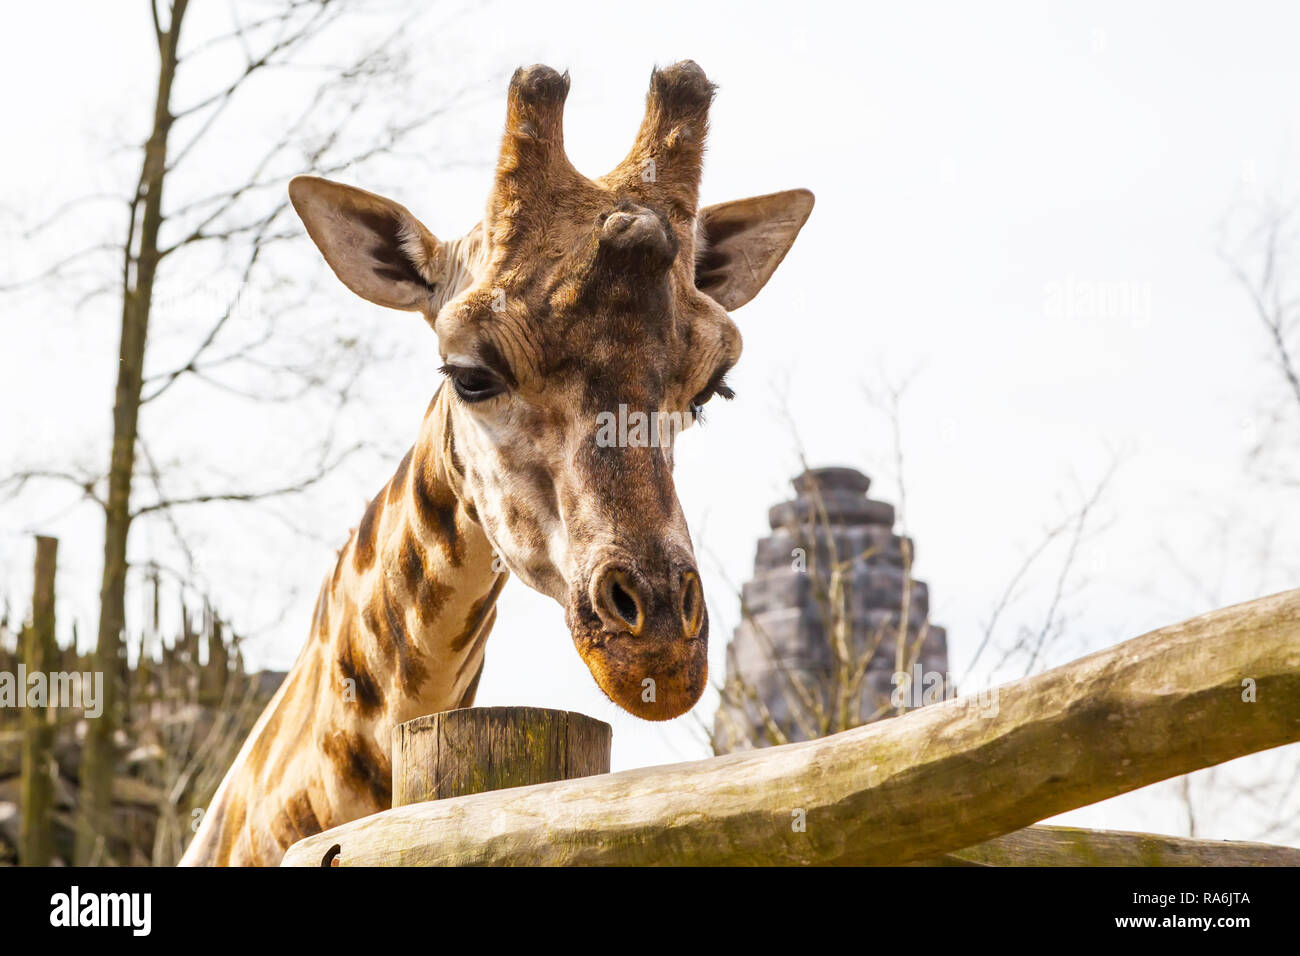 Sad giraffe head animal background with copy space Stock Photo